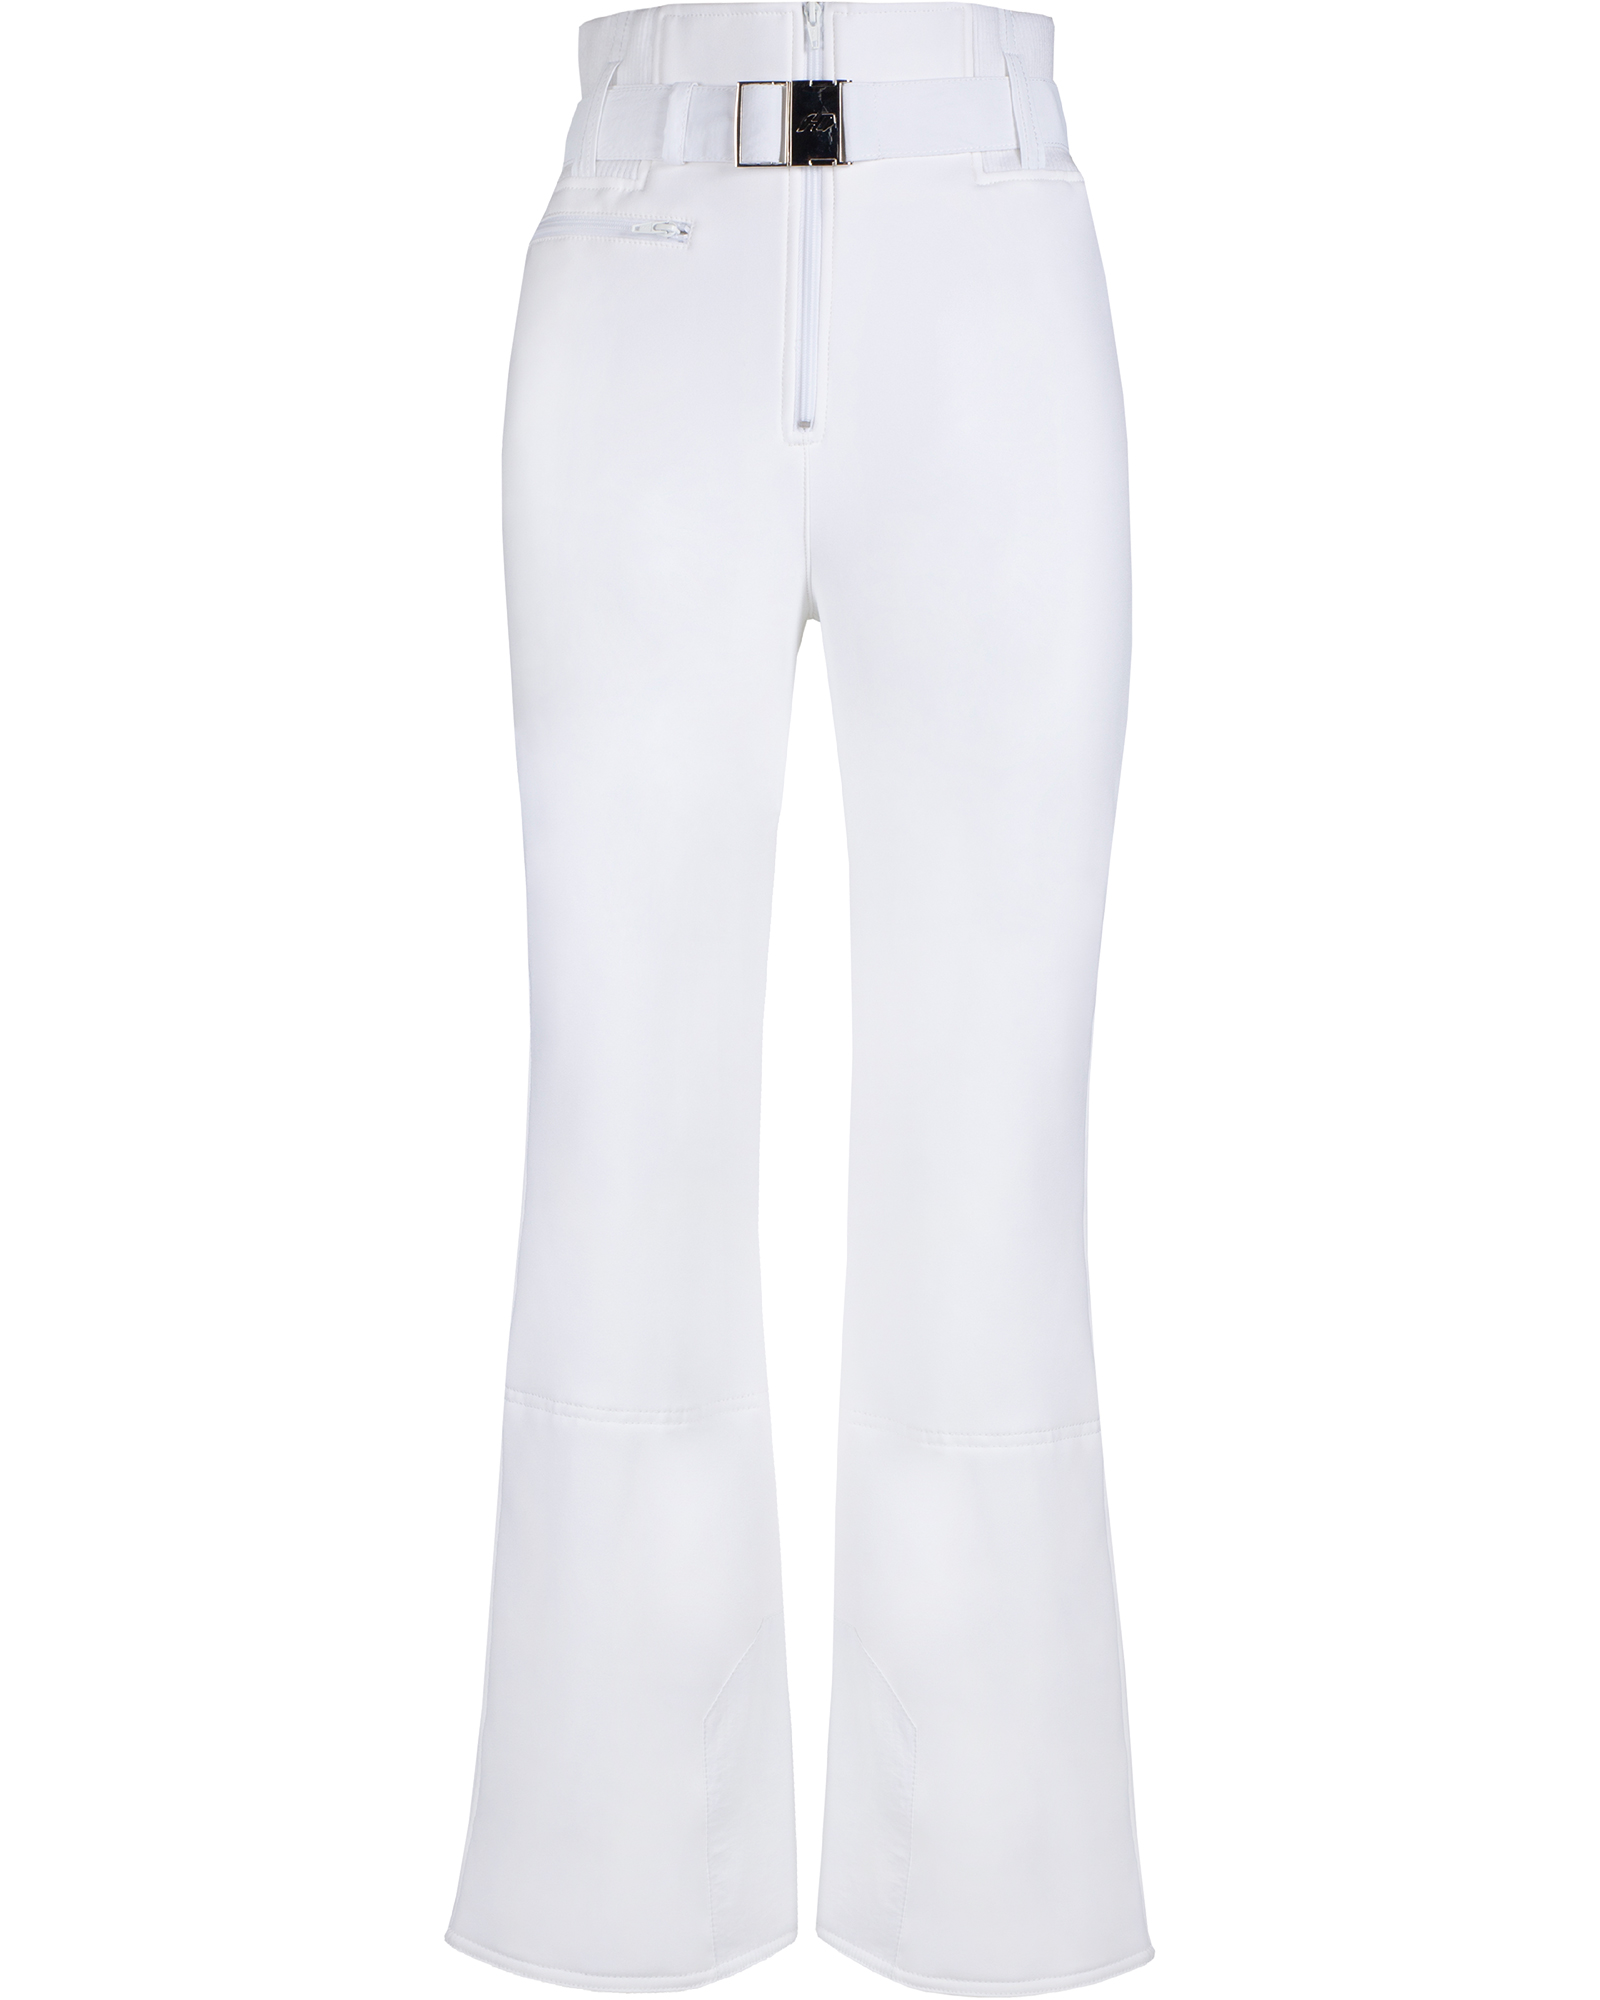 Duvillard Gridin Women’s Pants - White 16